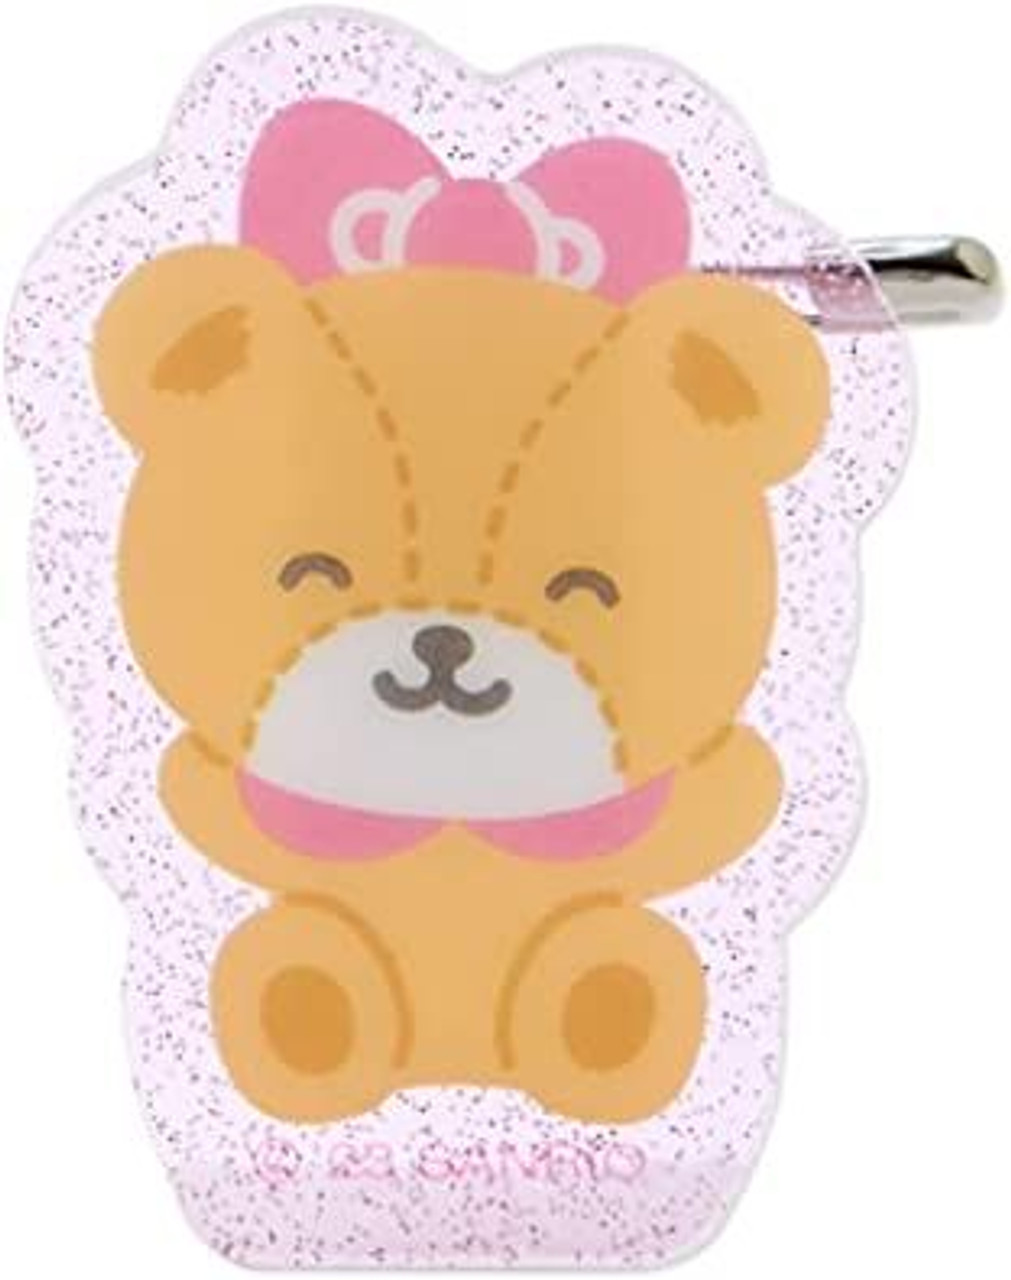 Sanrio Plush Mascot Holder With Badge - Hello Kitty (Smiling)